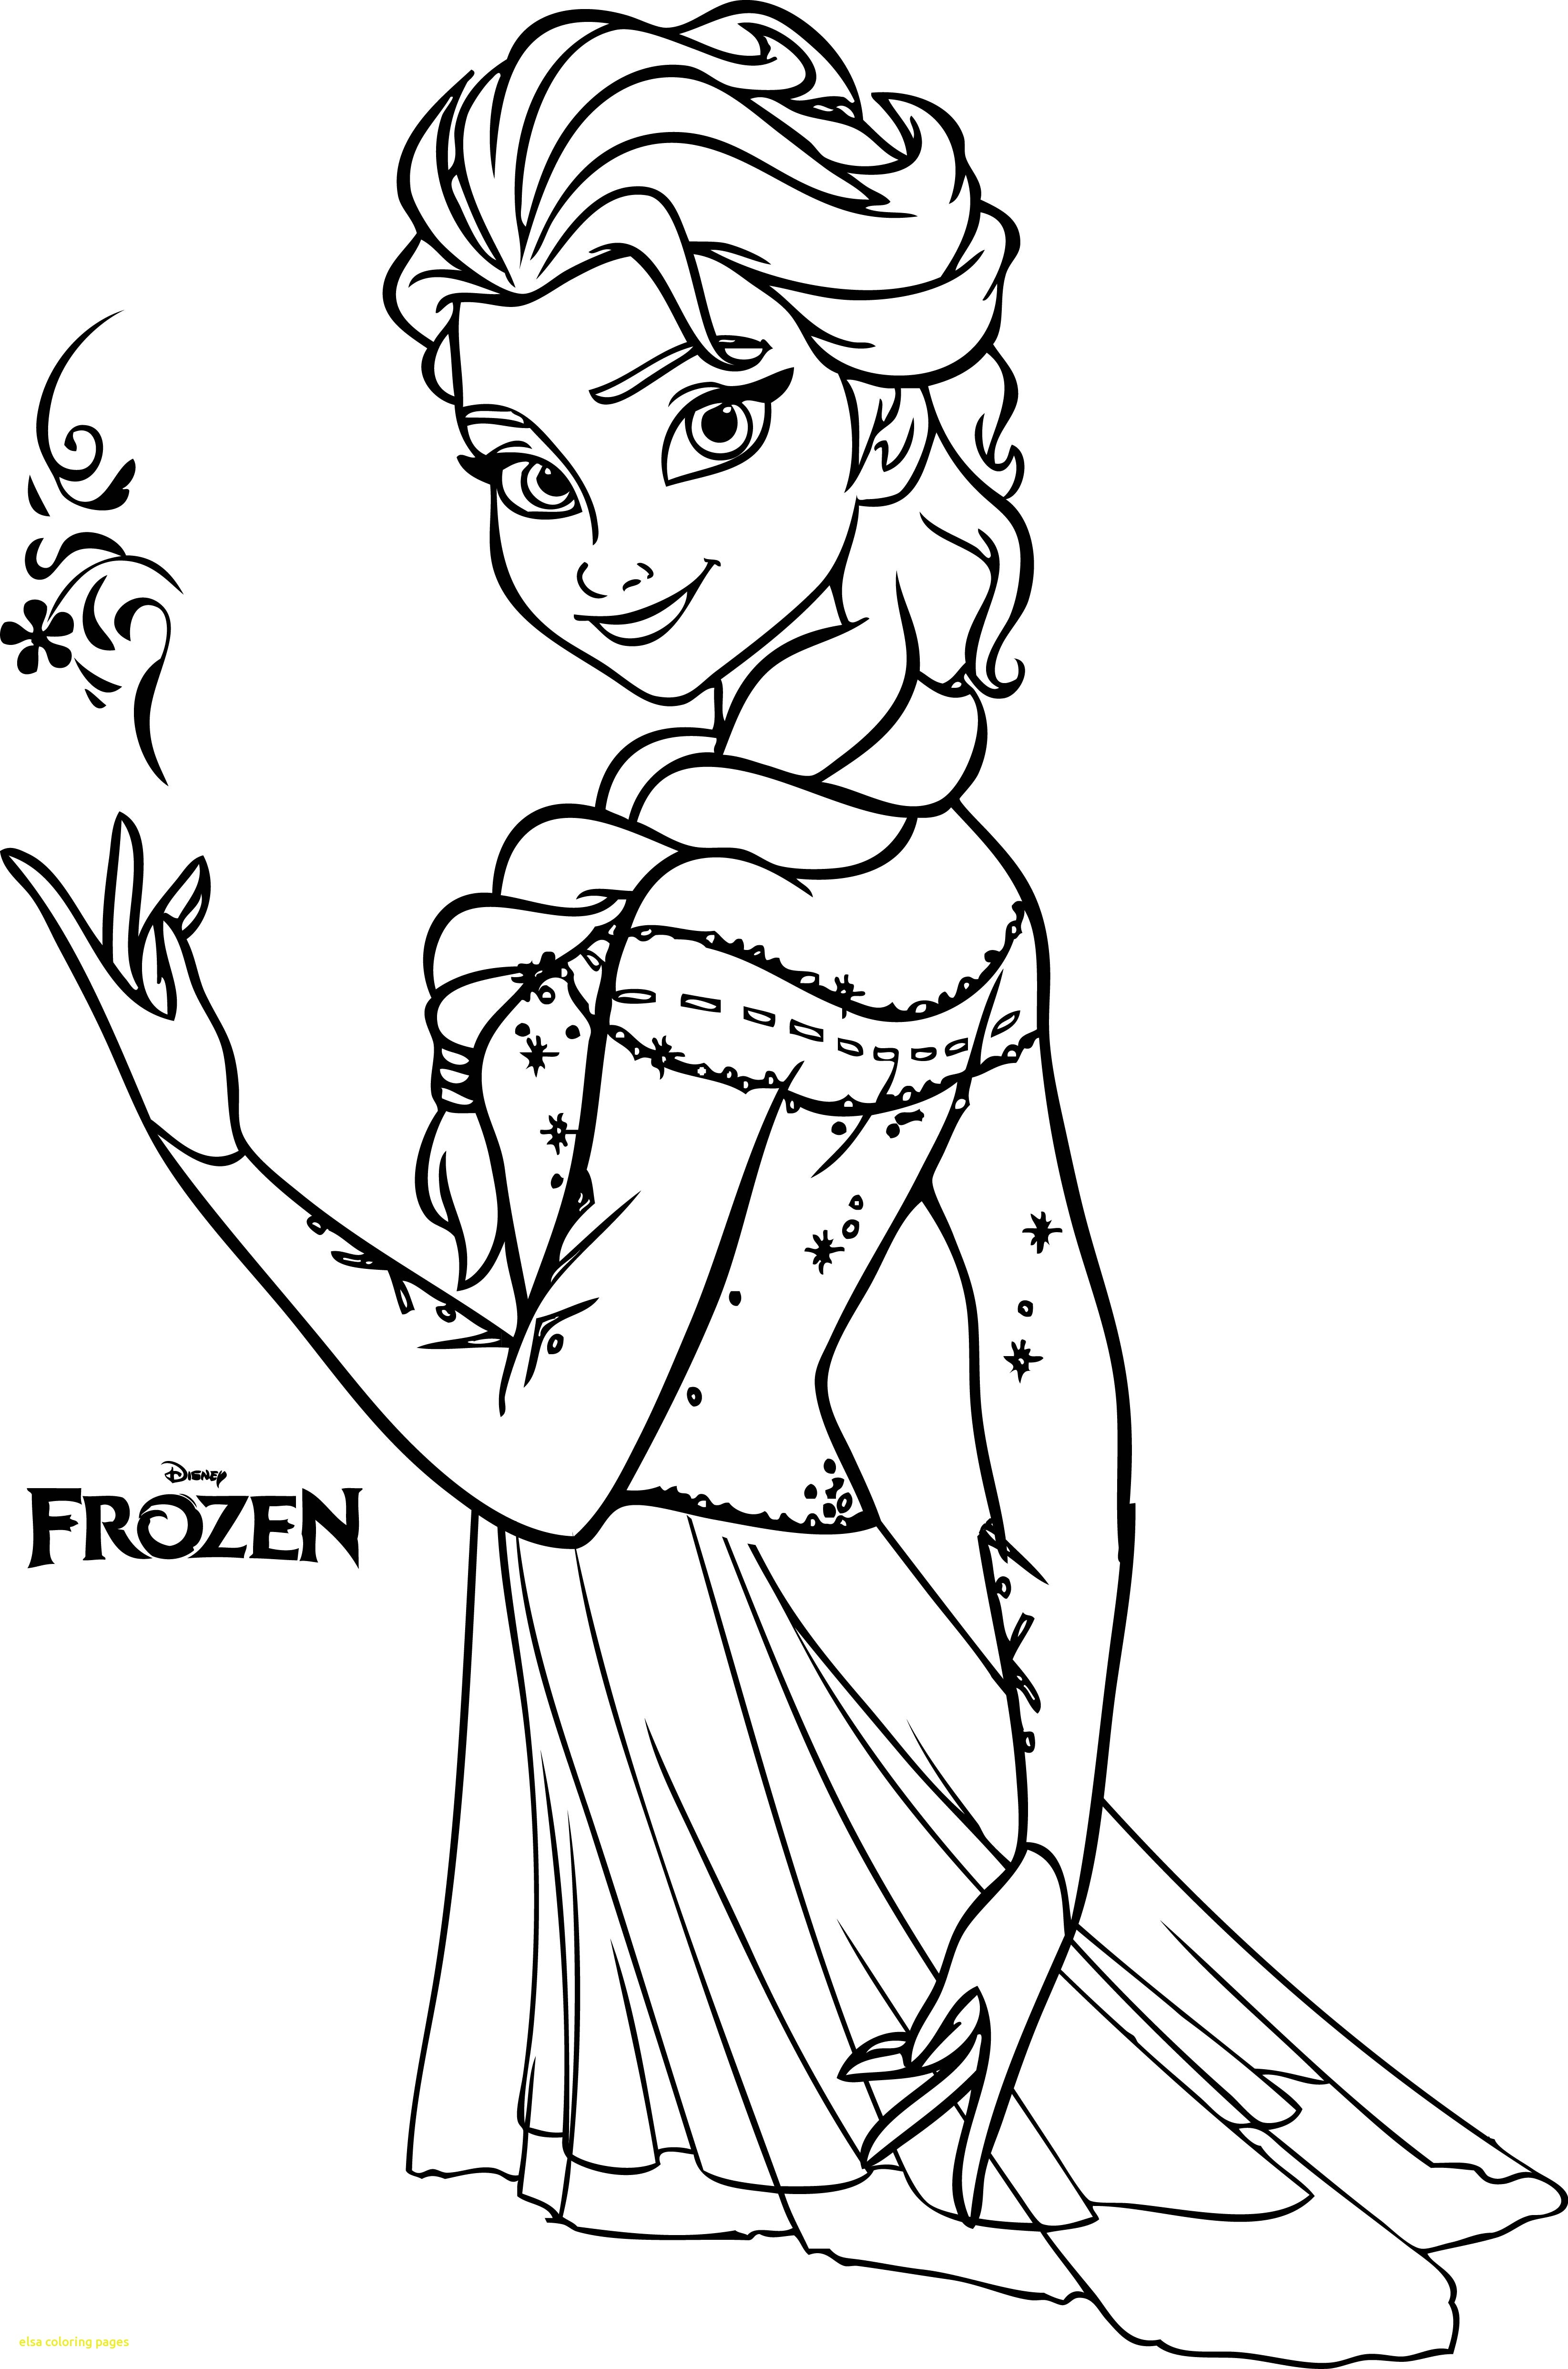 Disney Princess Coloring Pages Frozen Elsa at GetDrawings ...